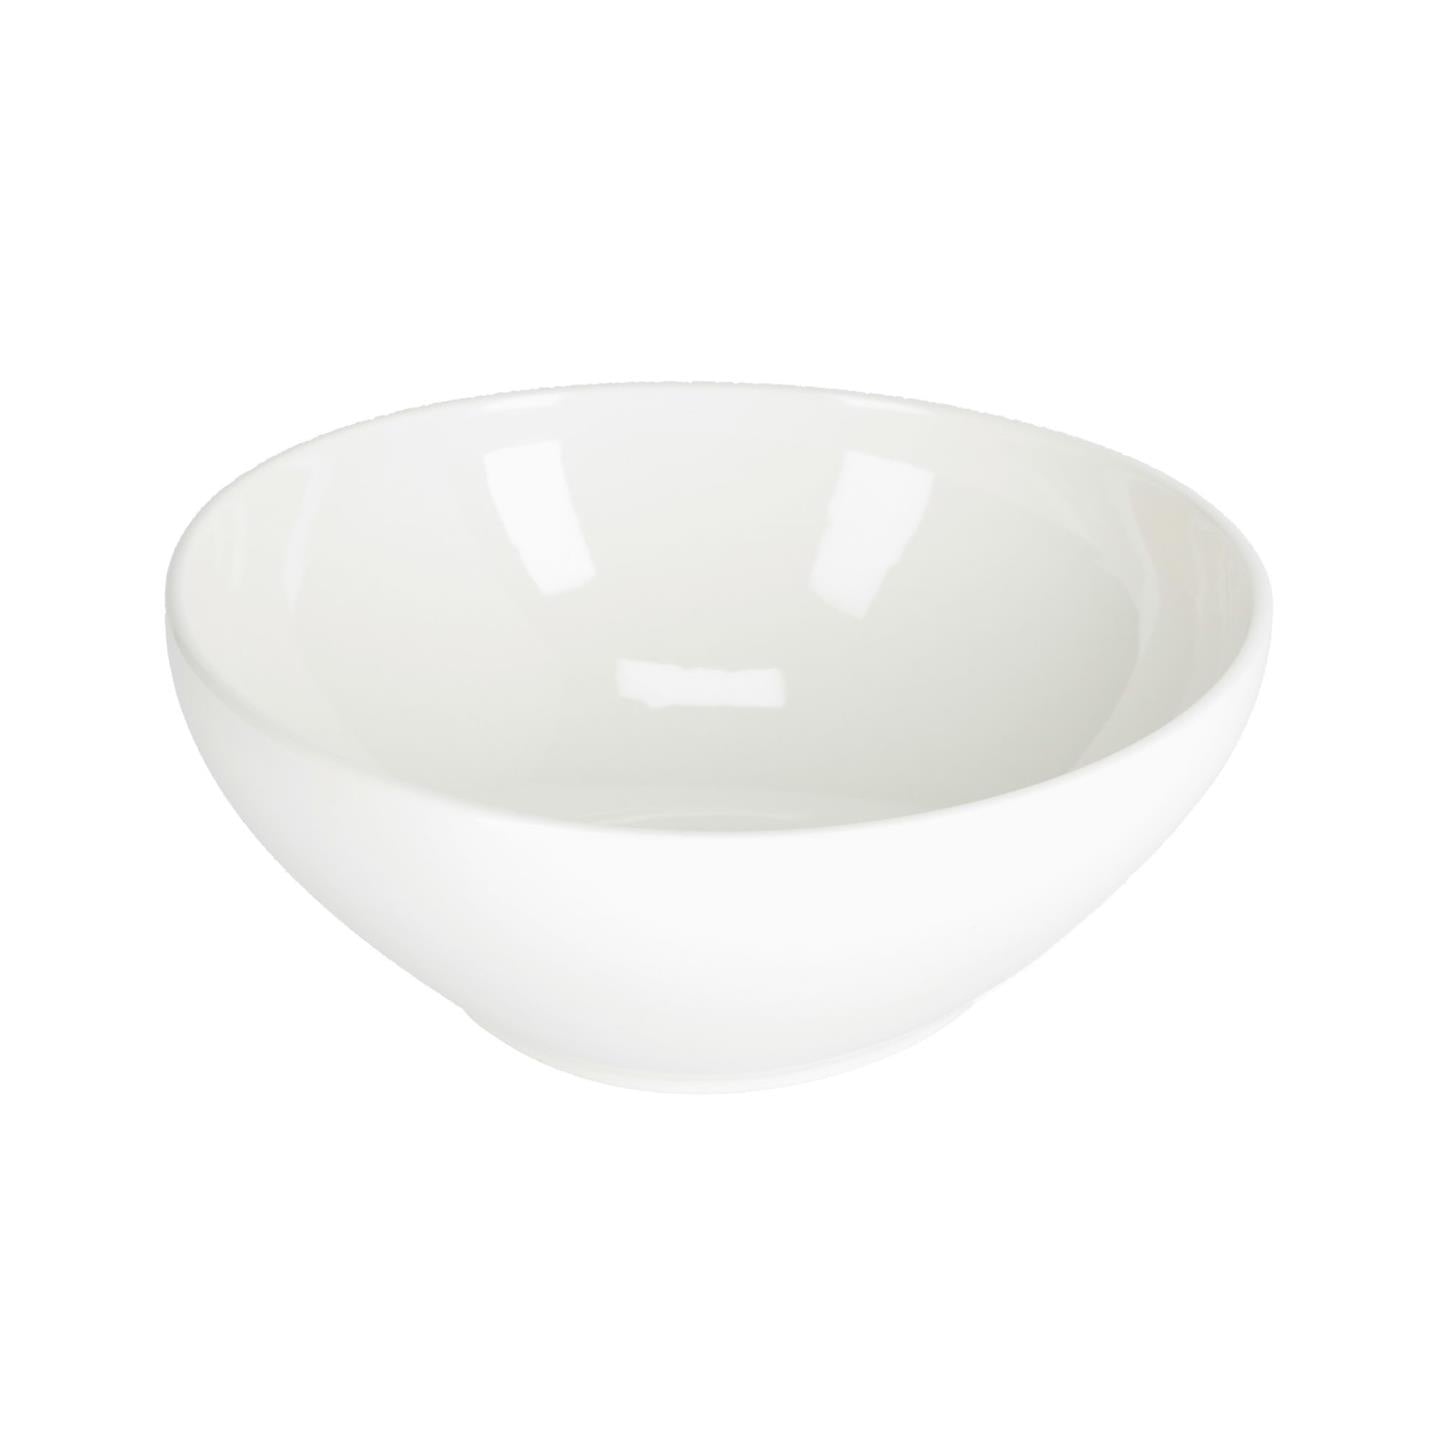 Pahi large round porcelain bowl in white